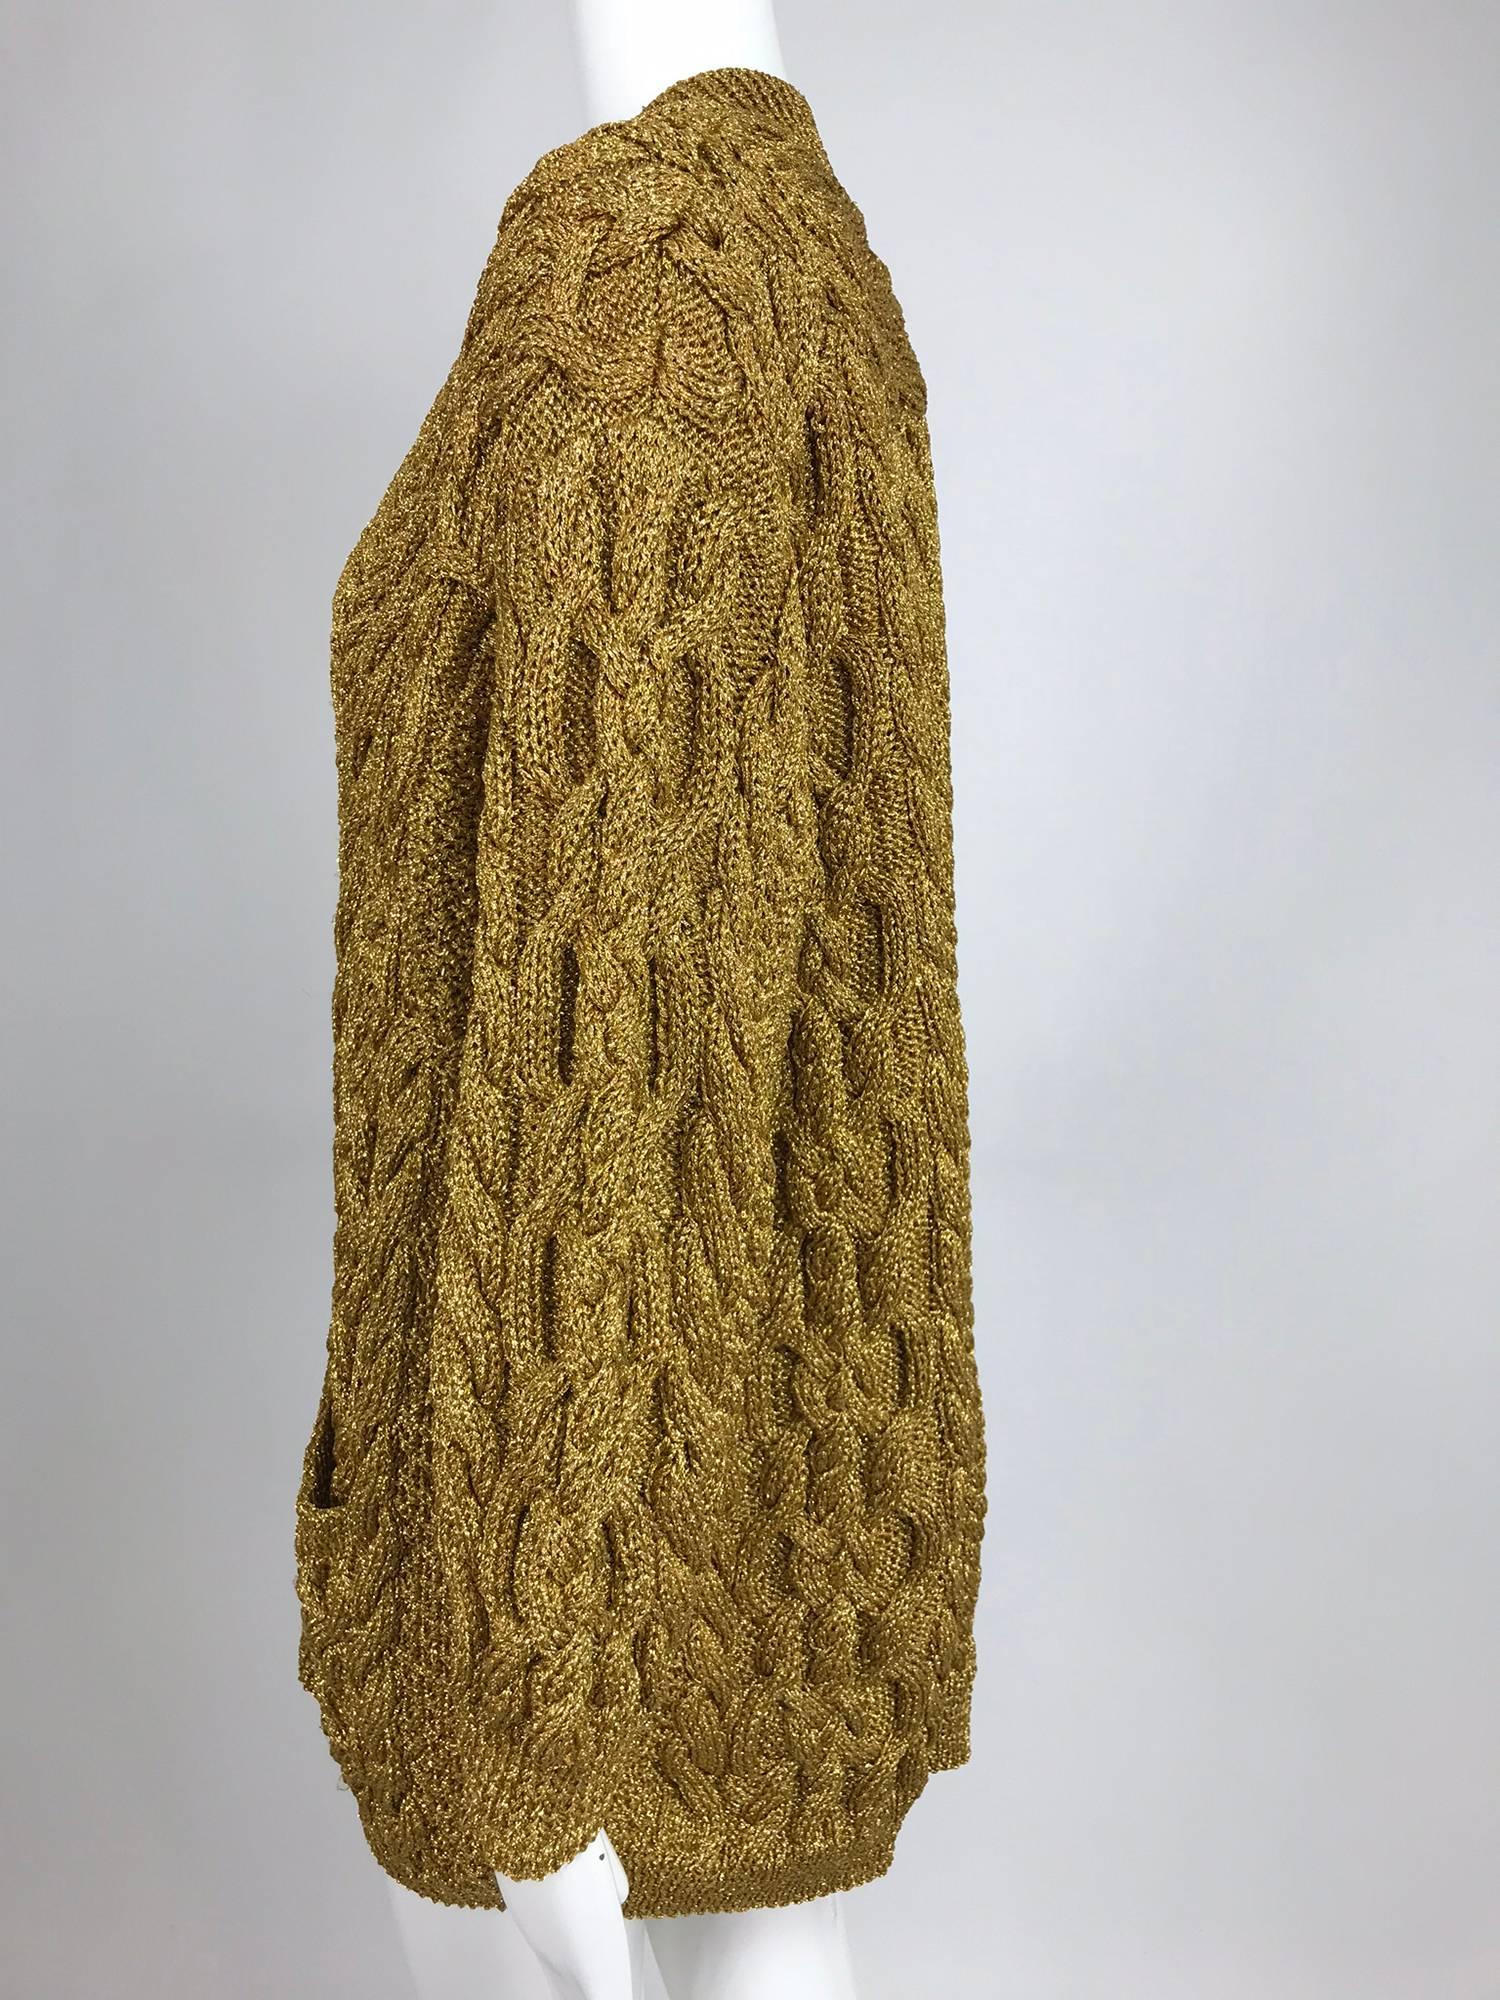 Anne Klein chunky gold metallic knit cardigan sweater 1990s 2